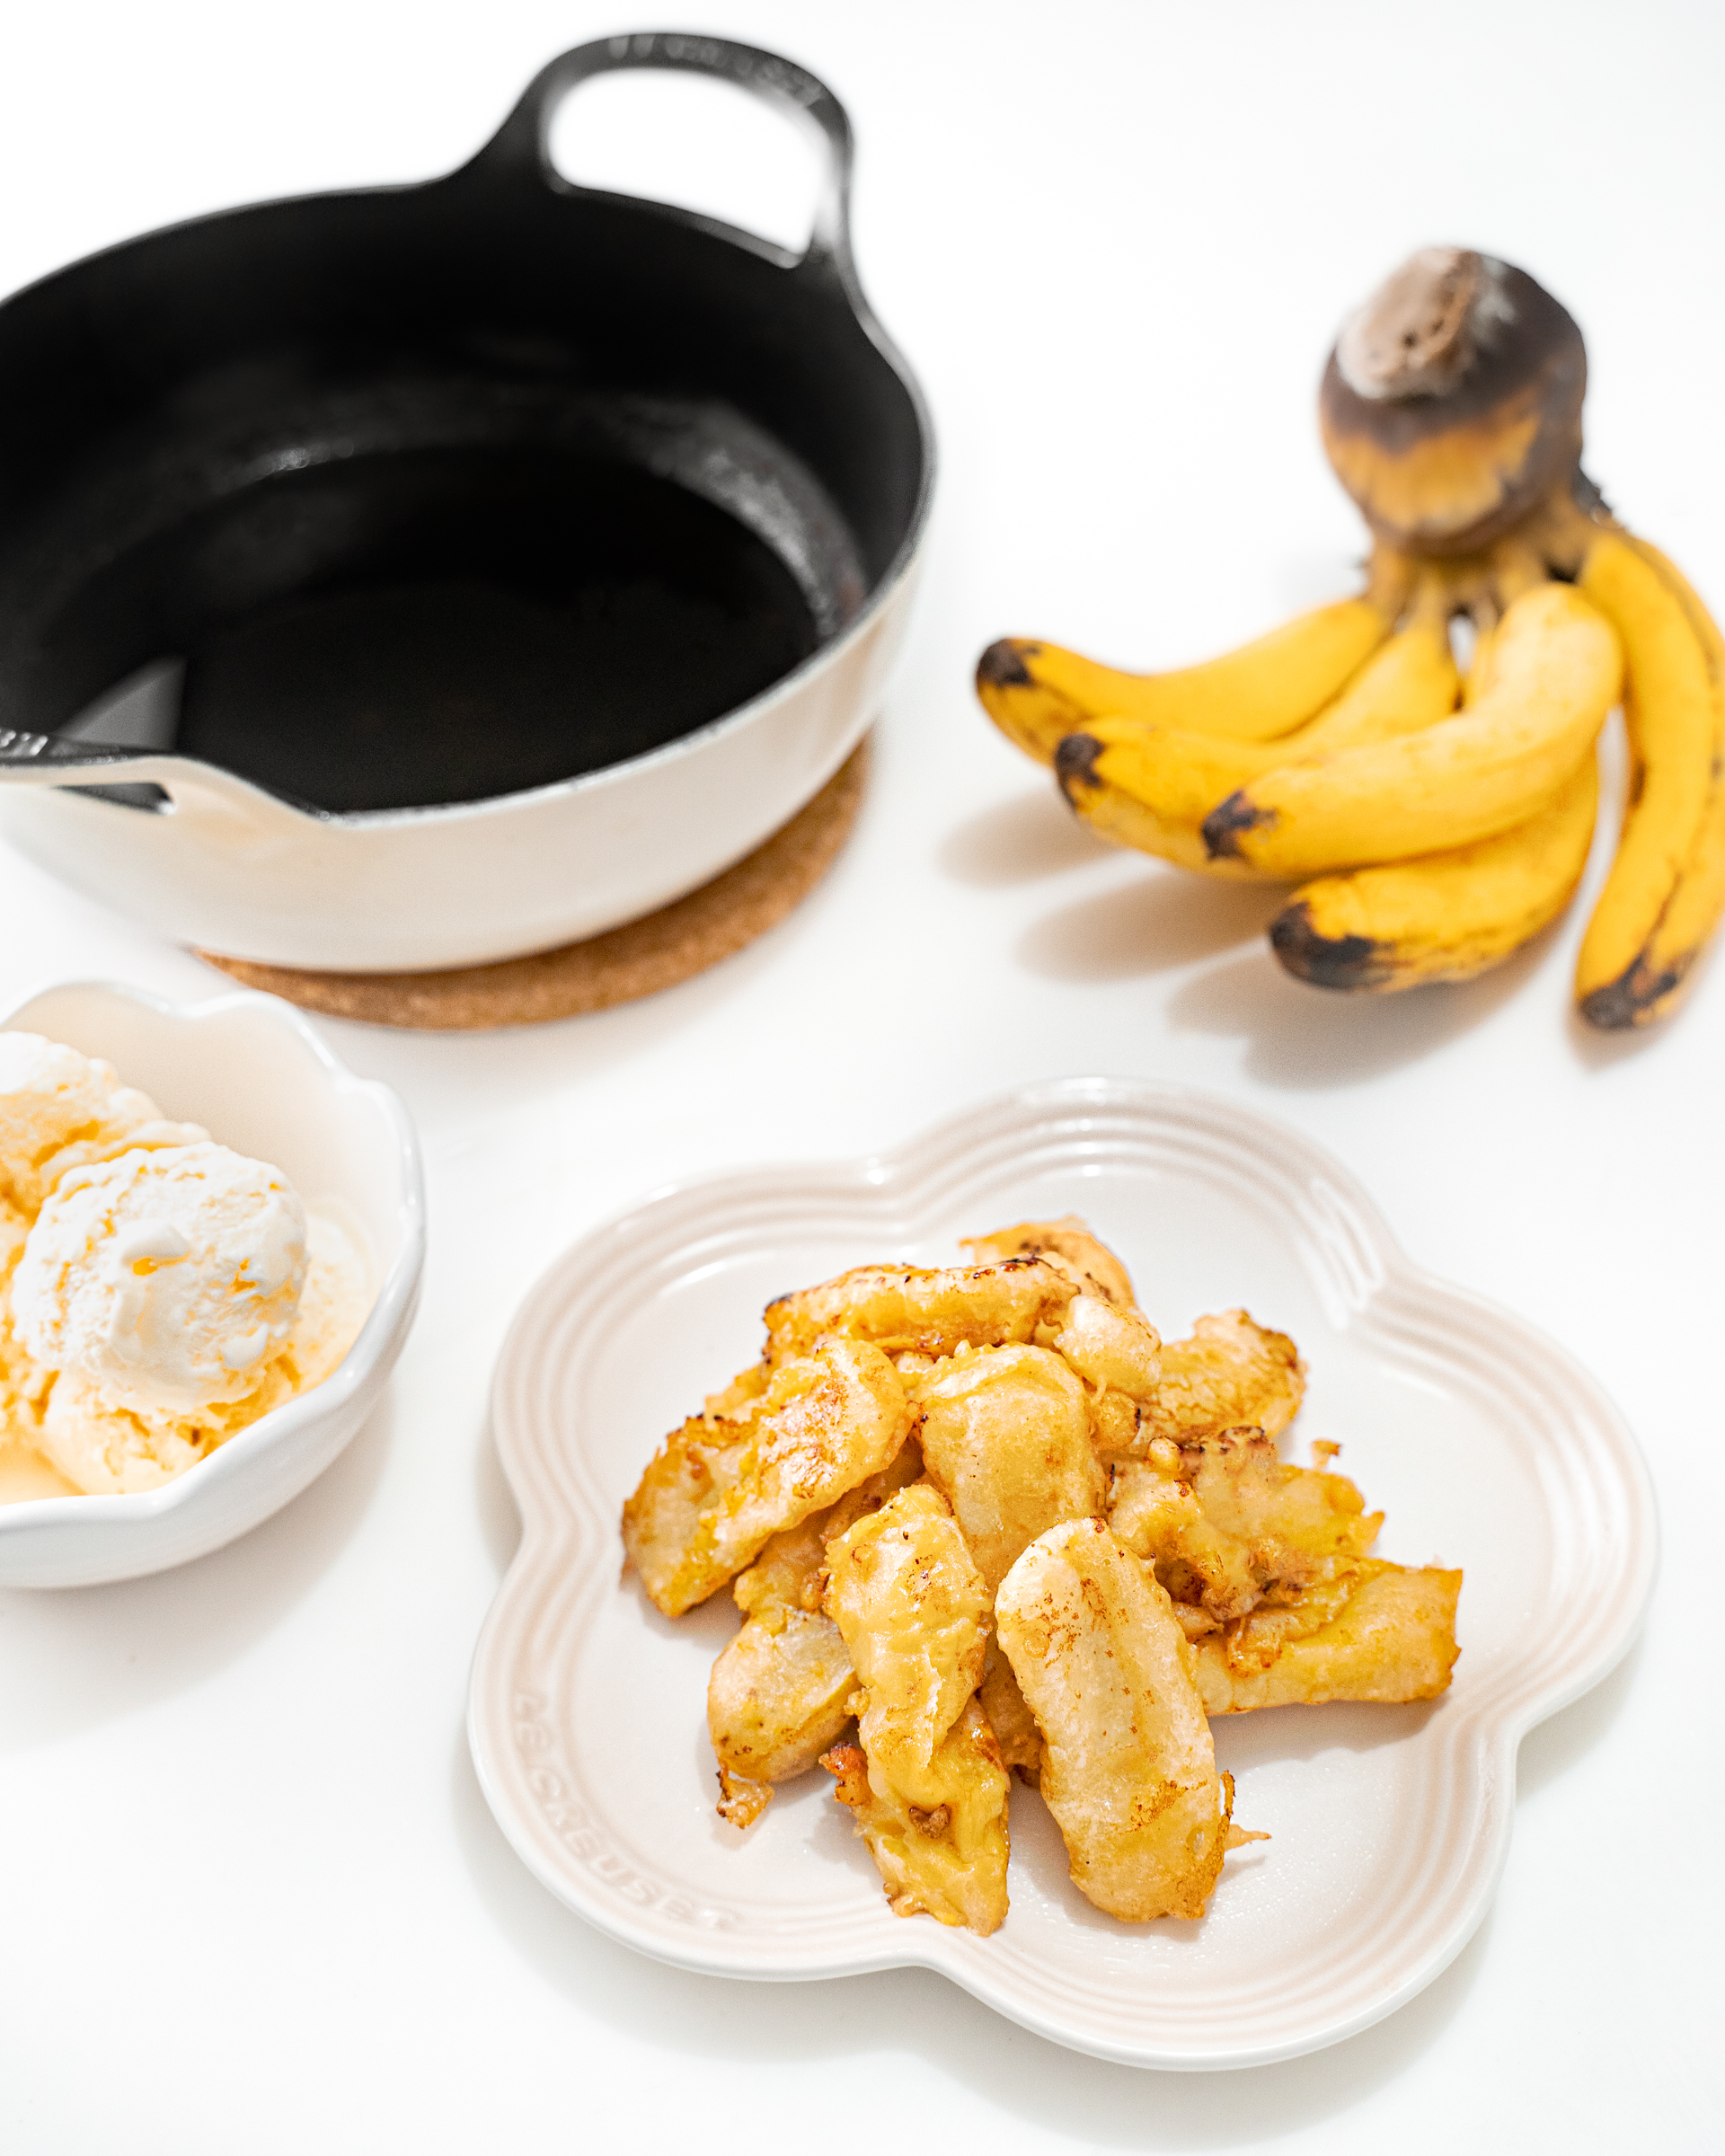 Banana Fritters (Serves 3-4)